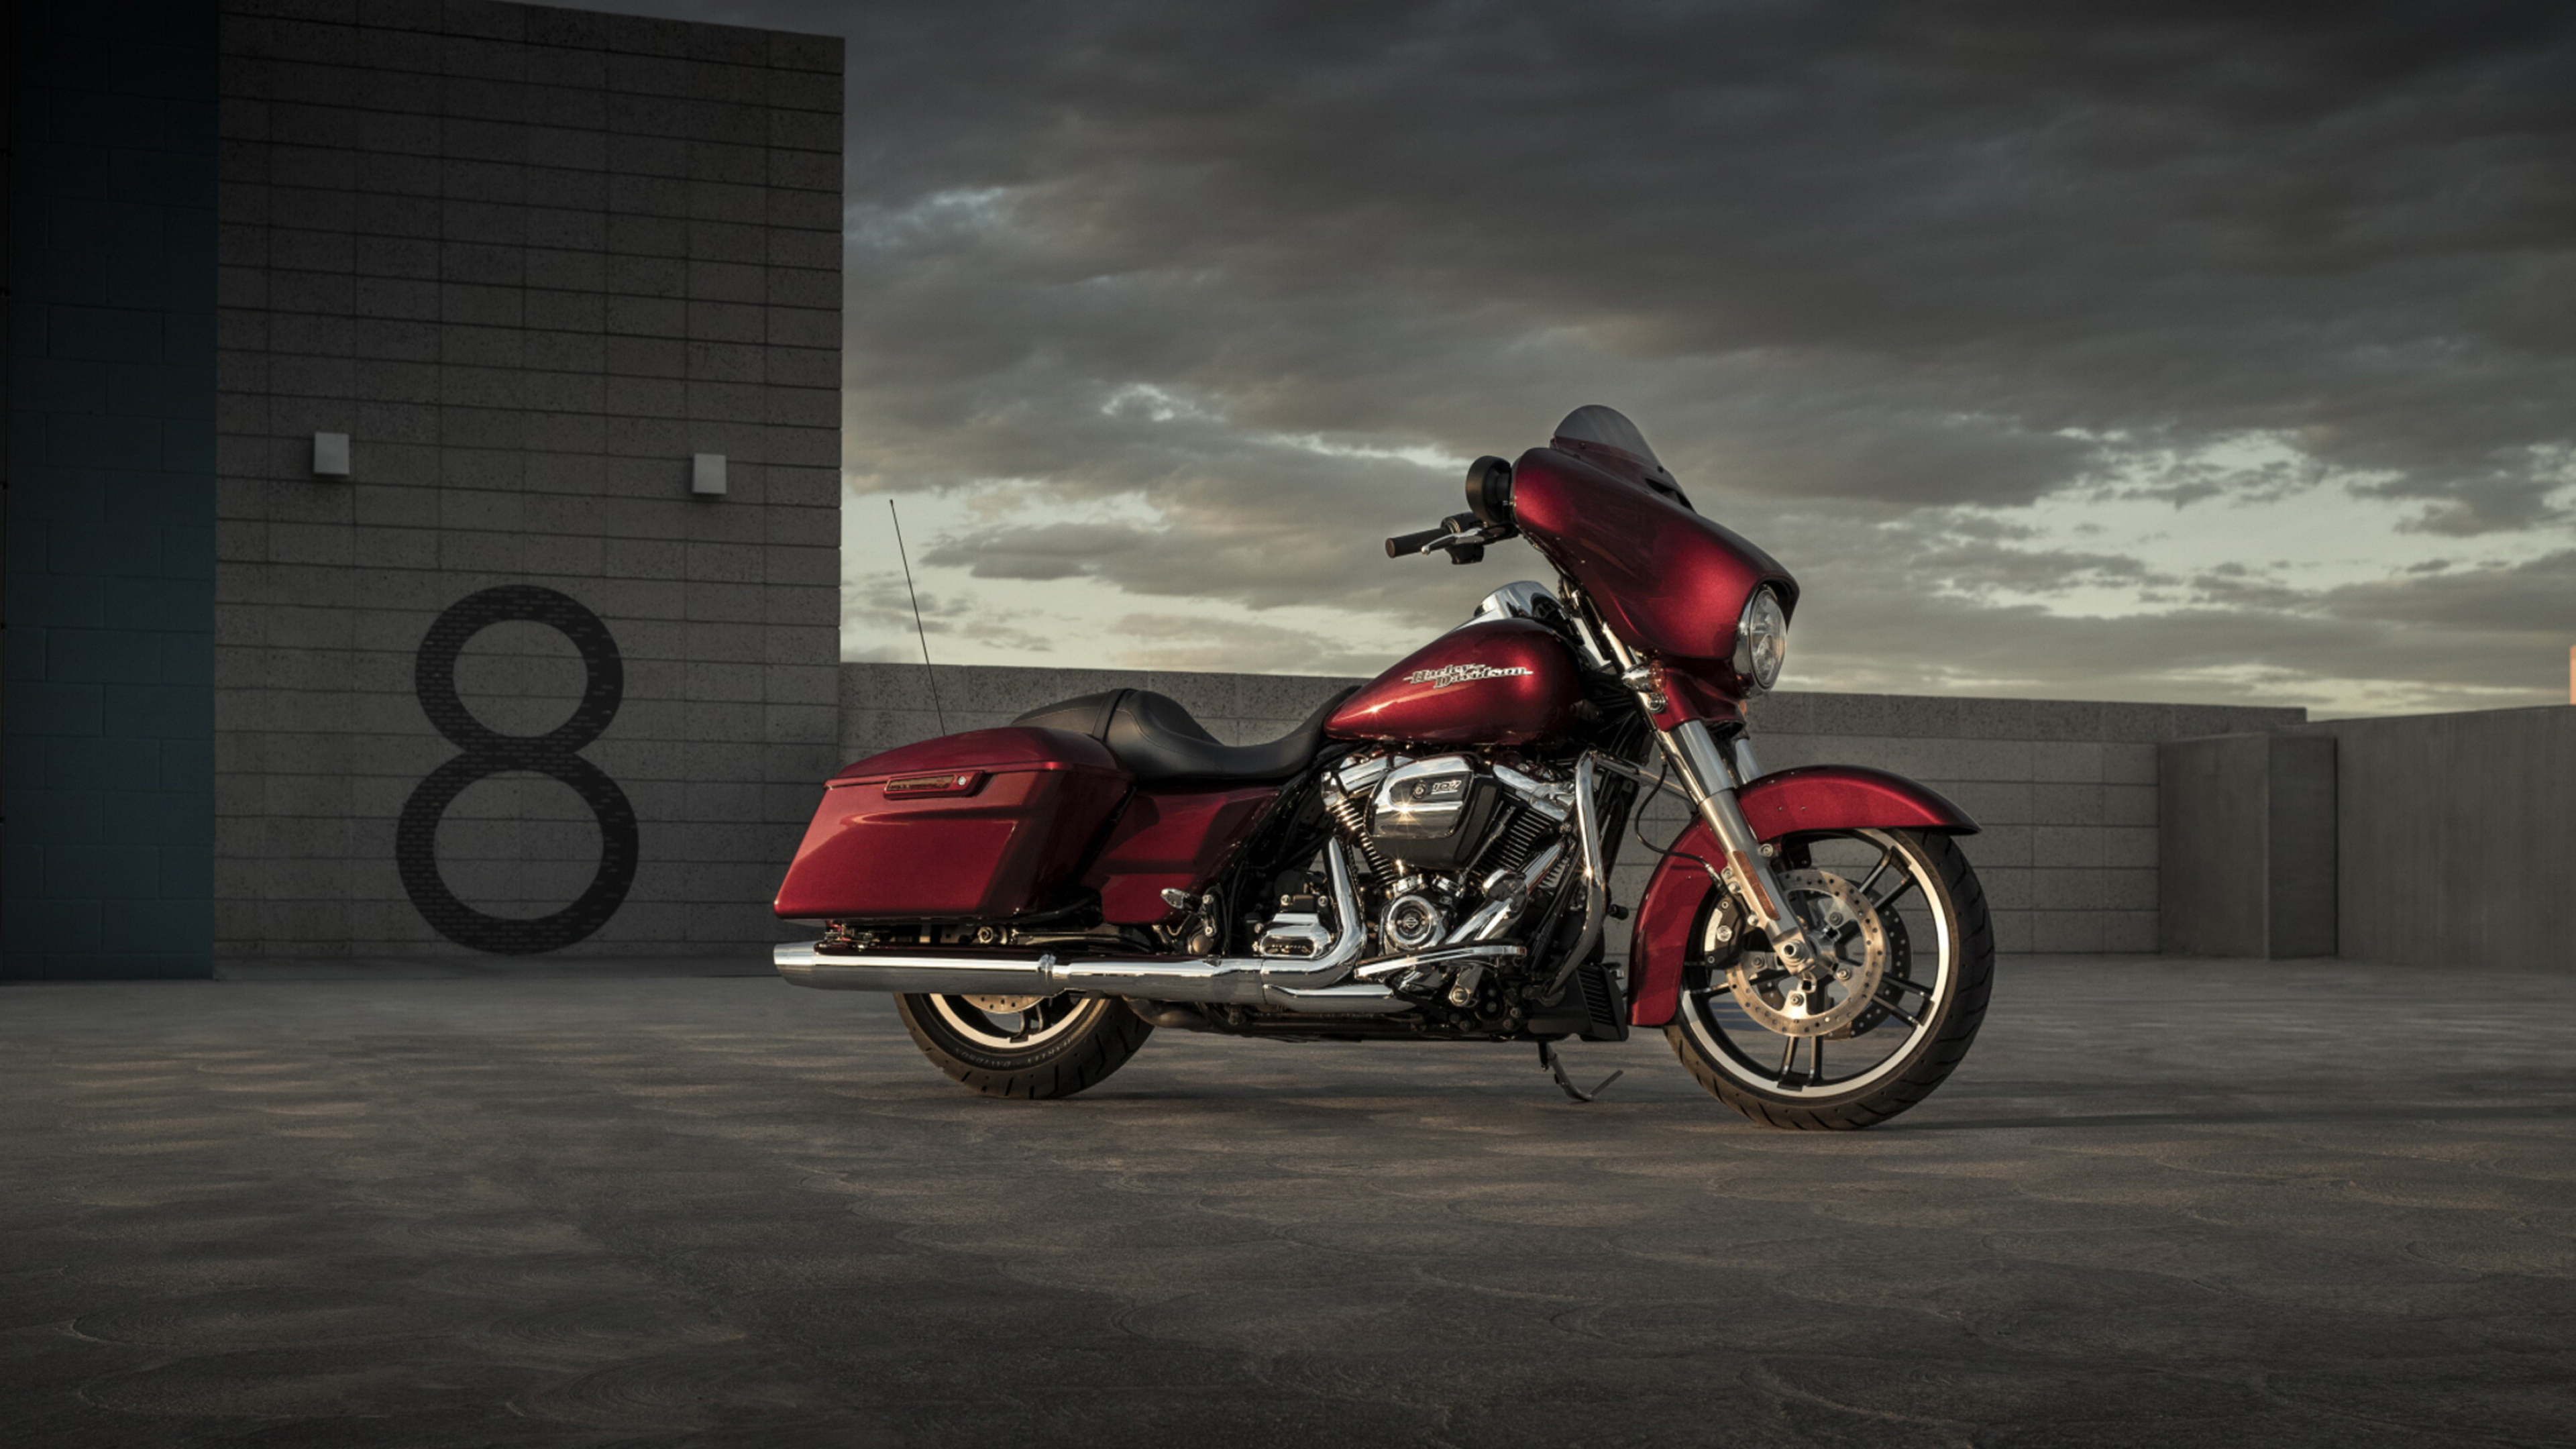 Harley-Davidson Glide: Top-selling Touring model in the U.S., Showa suspension. 3840x2160 4K Wallpaper.